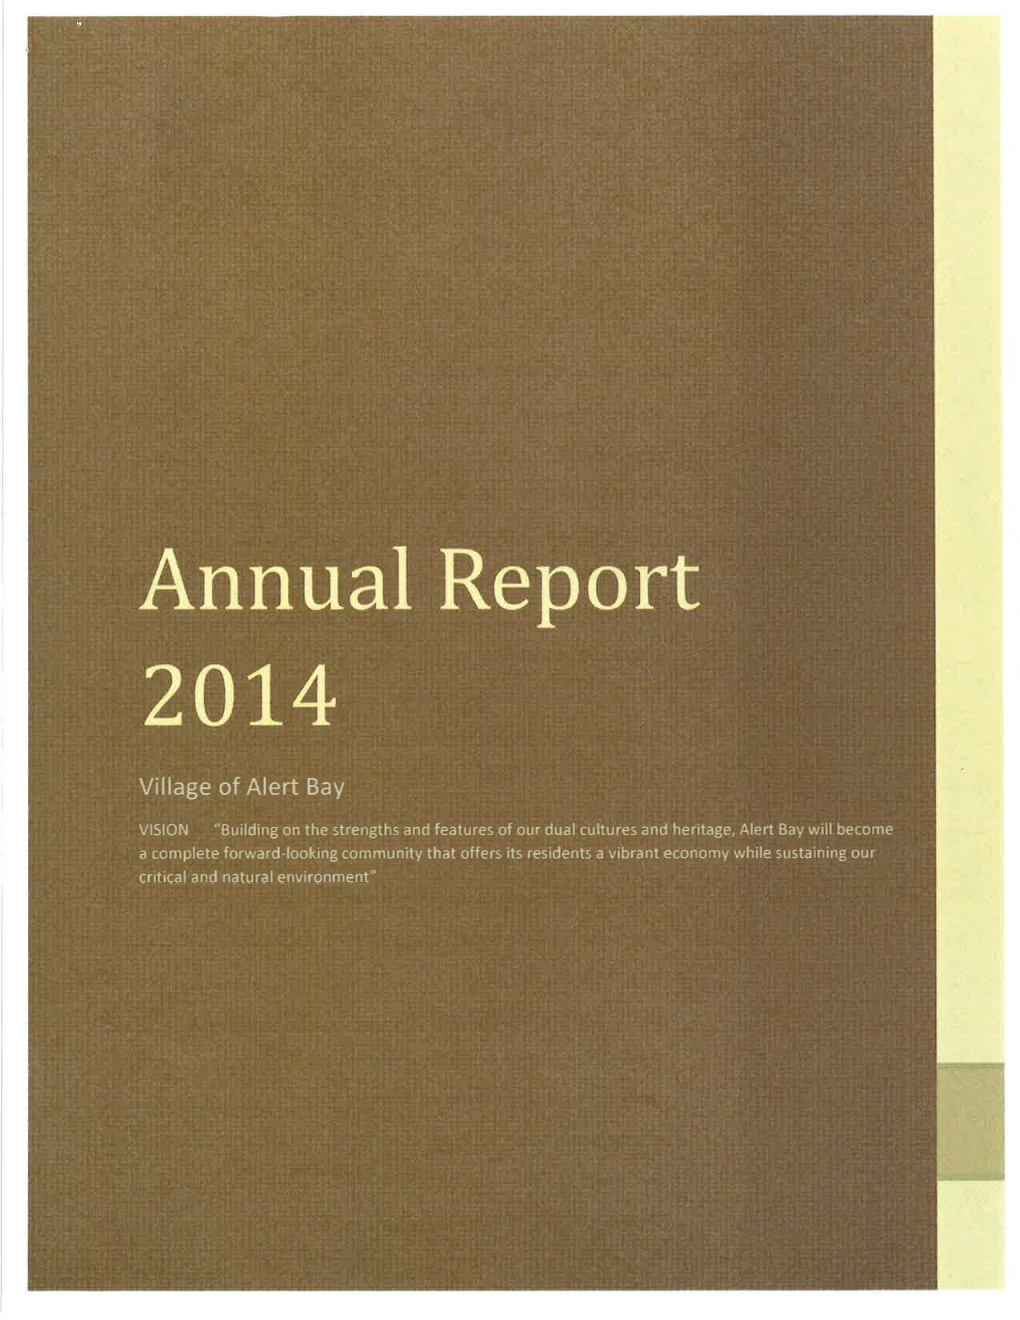 Annualreport 2014 Annual Report 2014 Village of Alert Bay